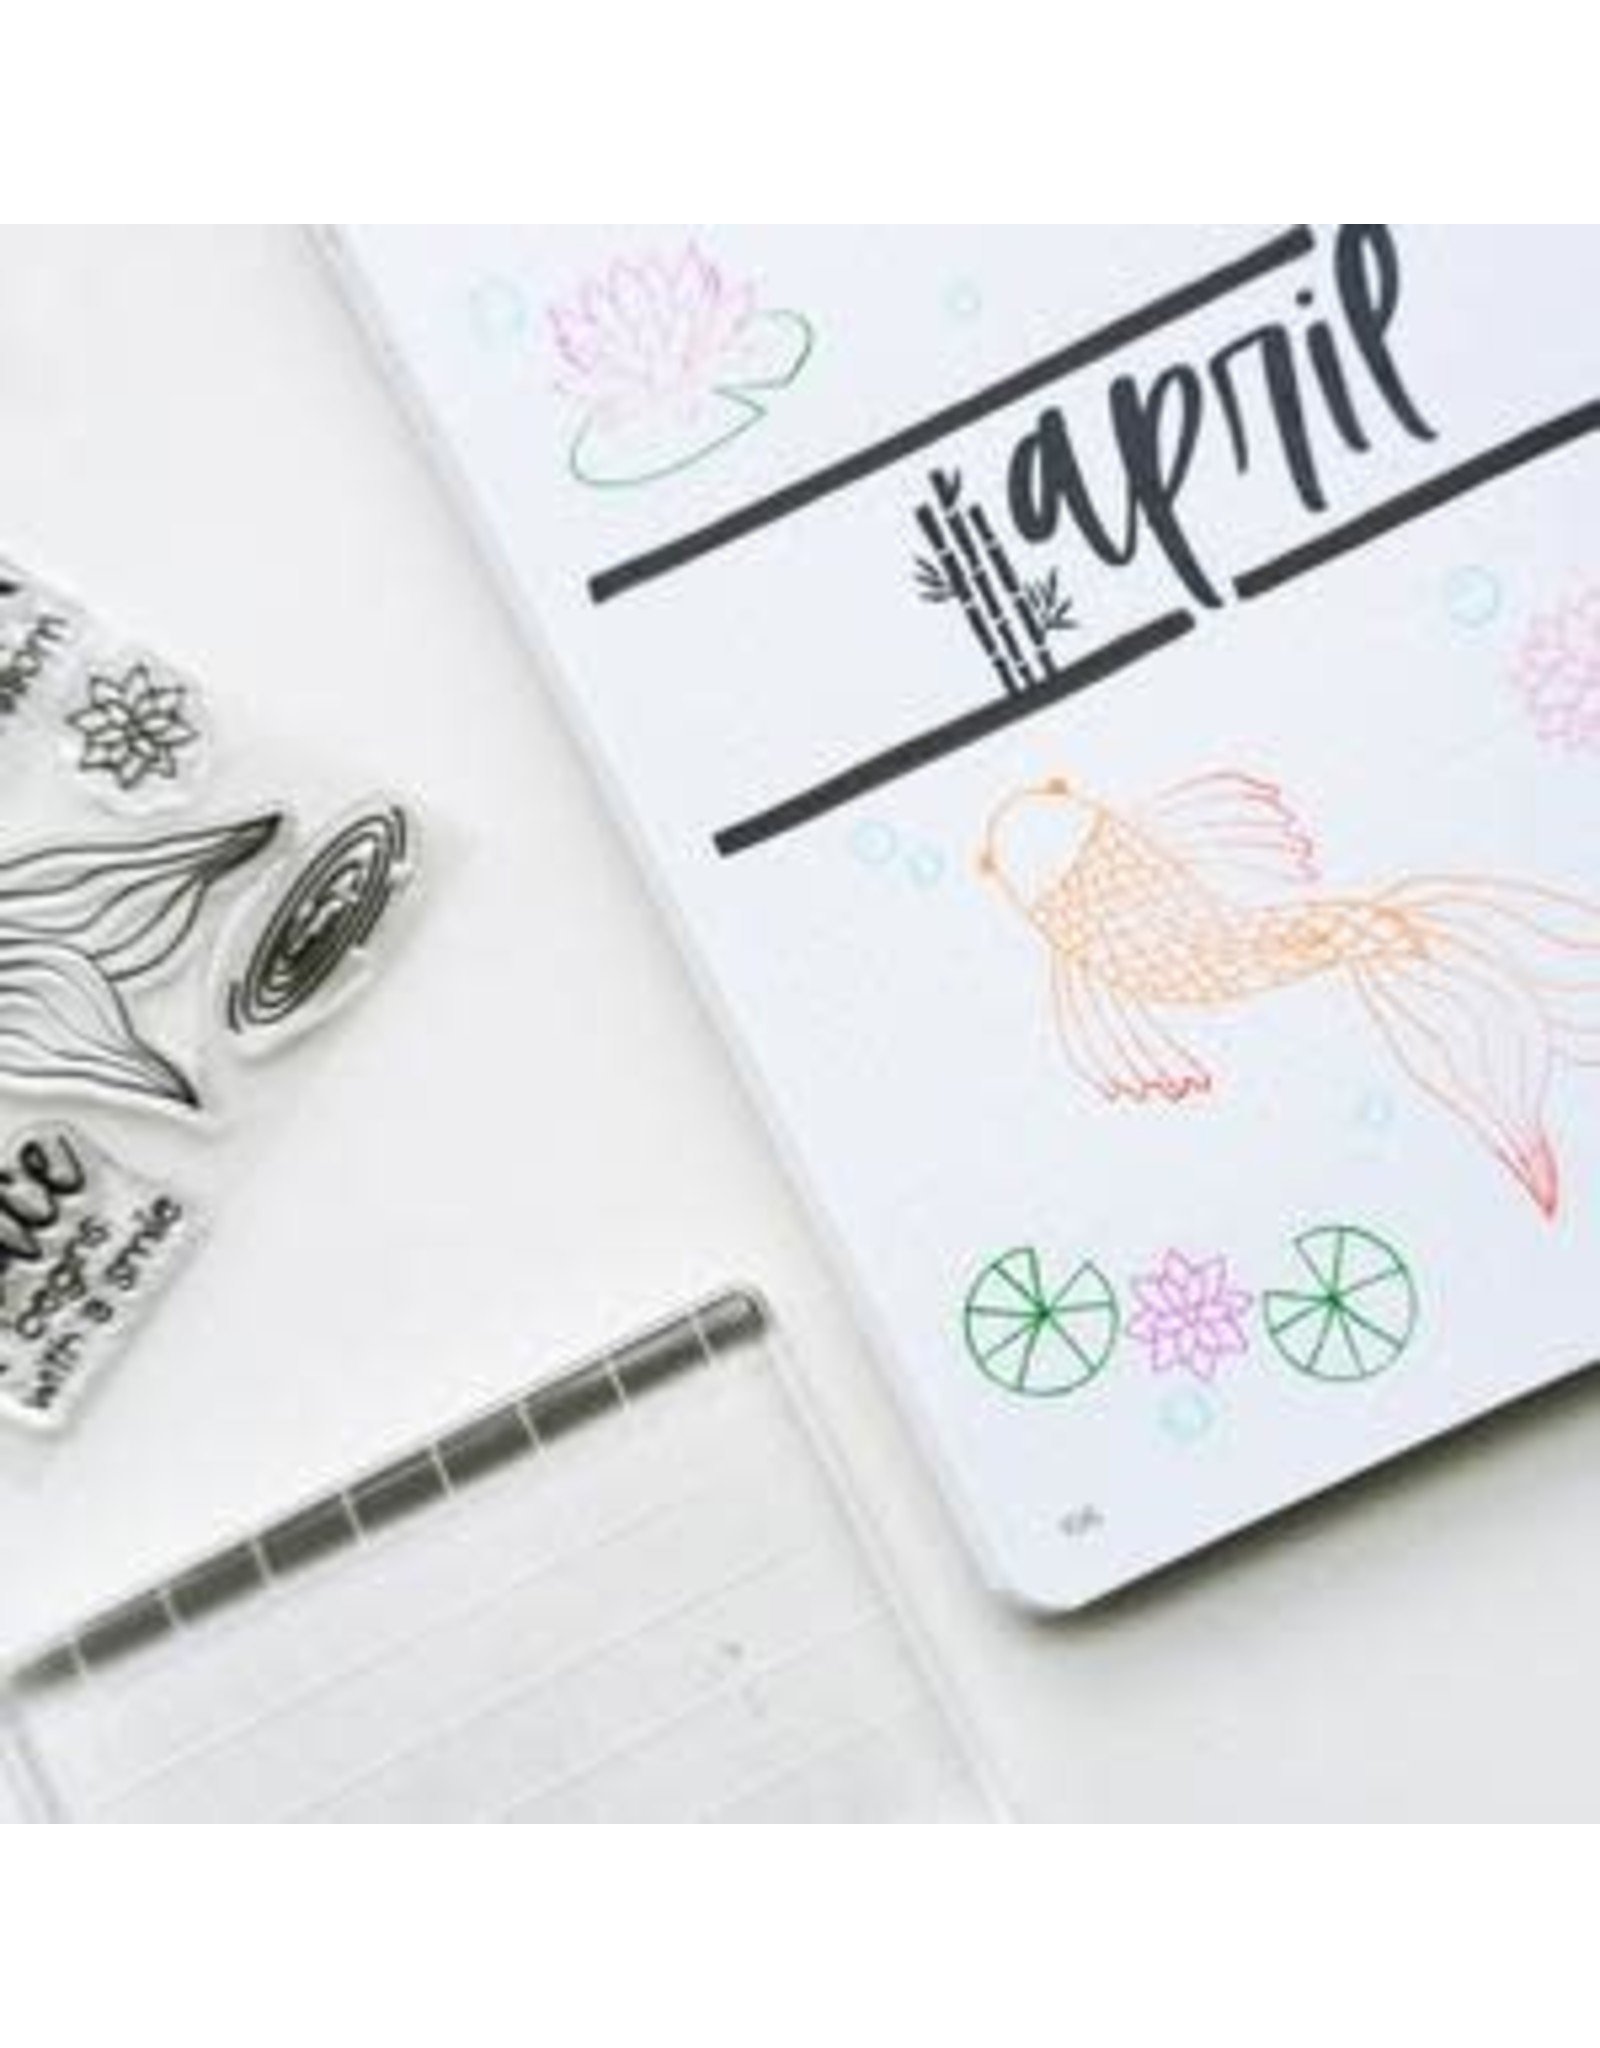 Catherine Pooler Designs Club Canvo Koi Pond Stamp Set